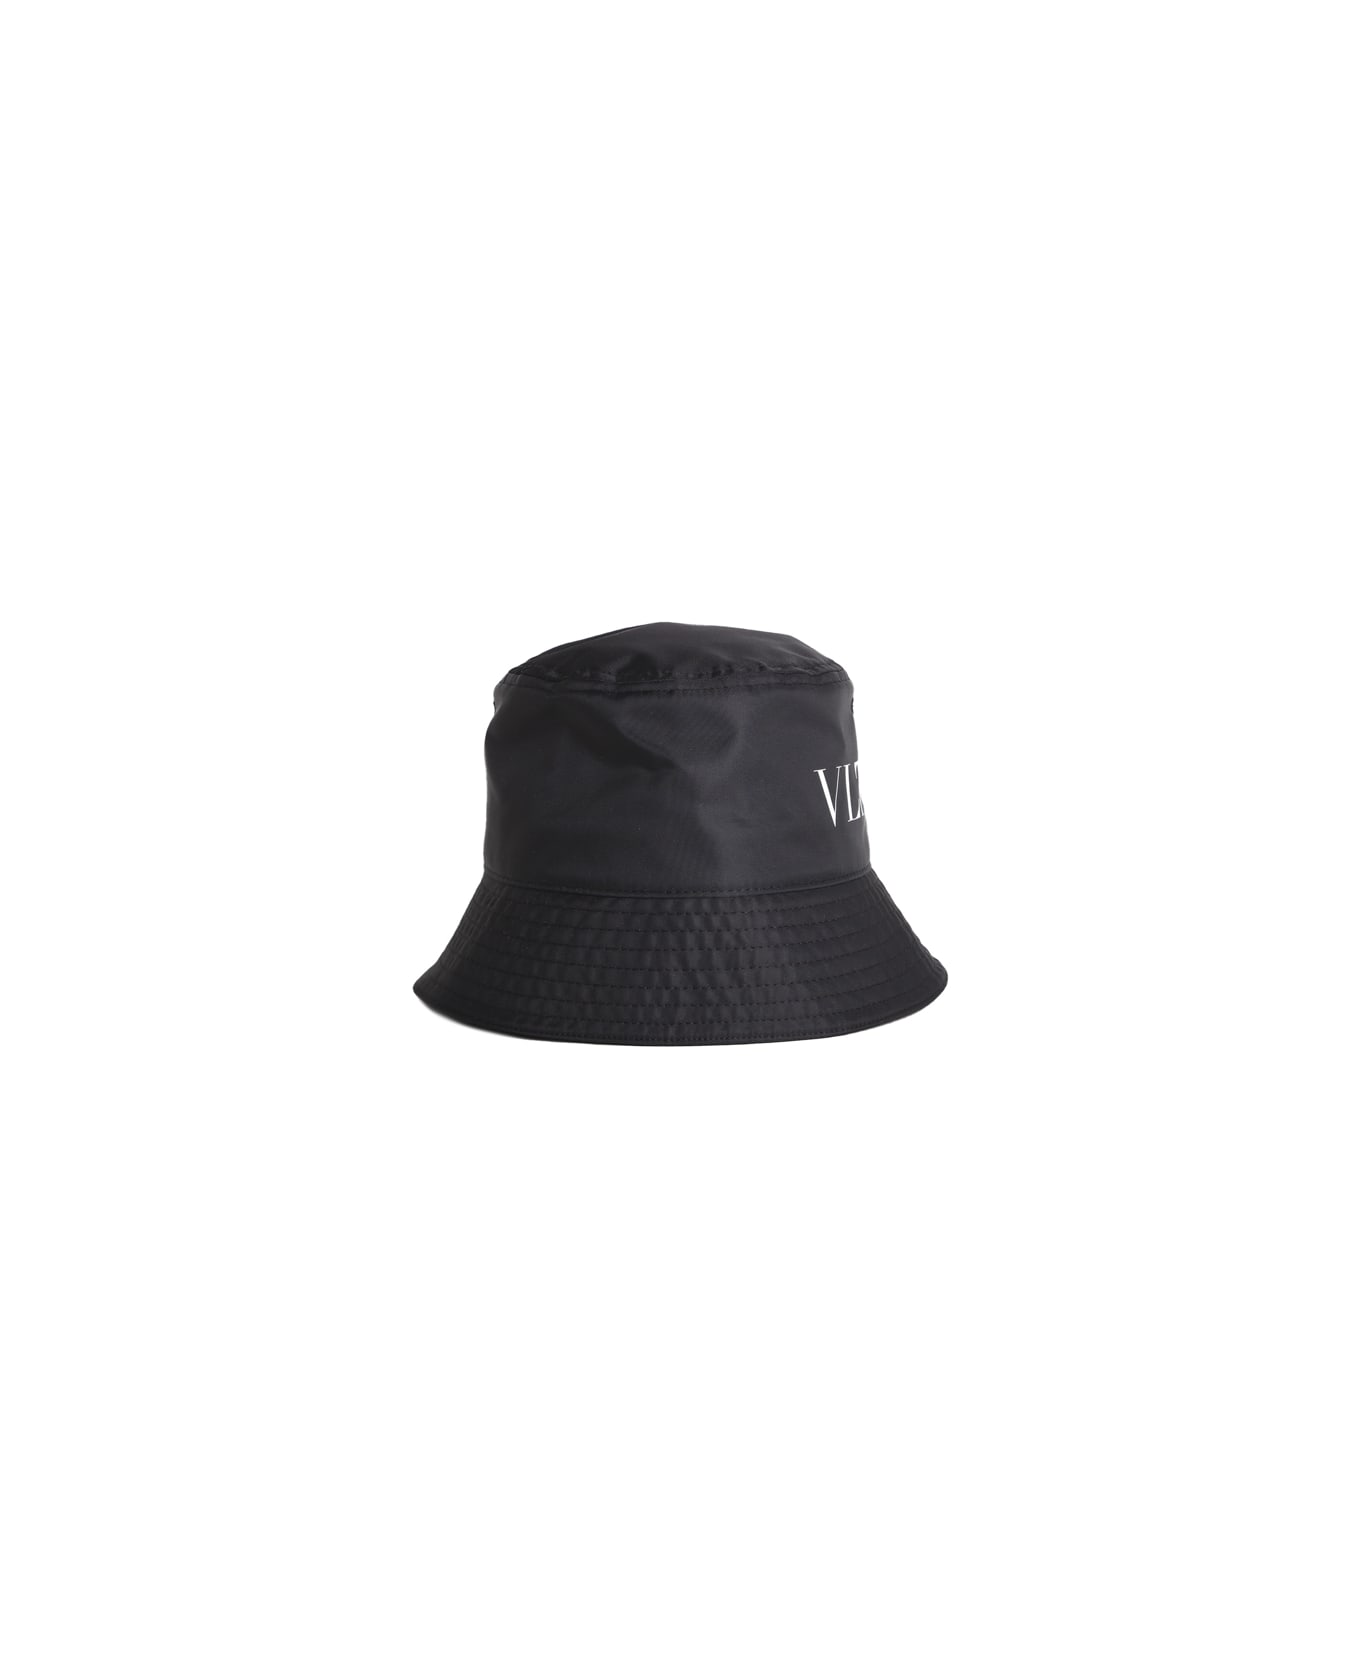 Valentino Garavani Vltn Bucket Hat Marrone - Nero/bianco